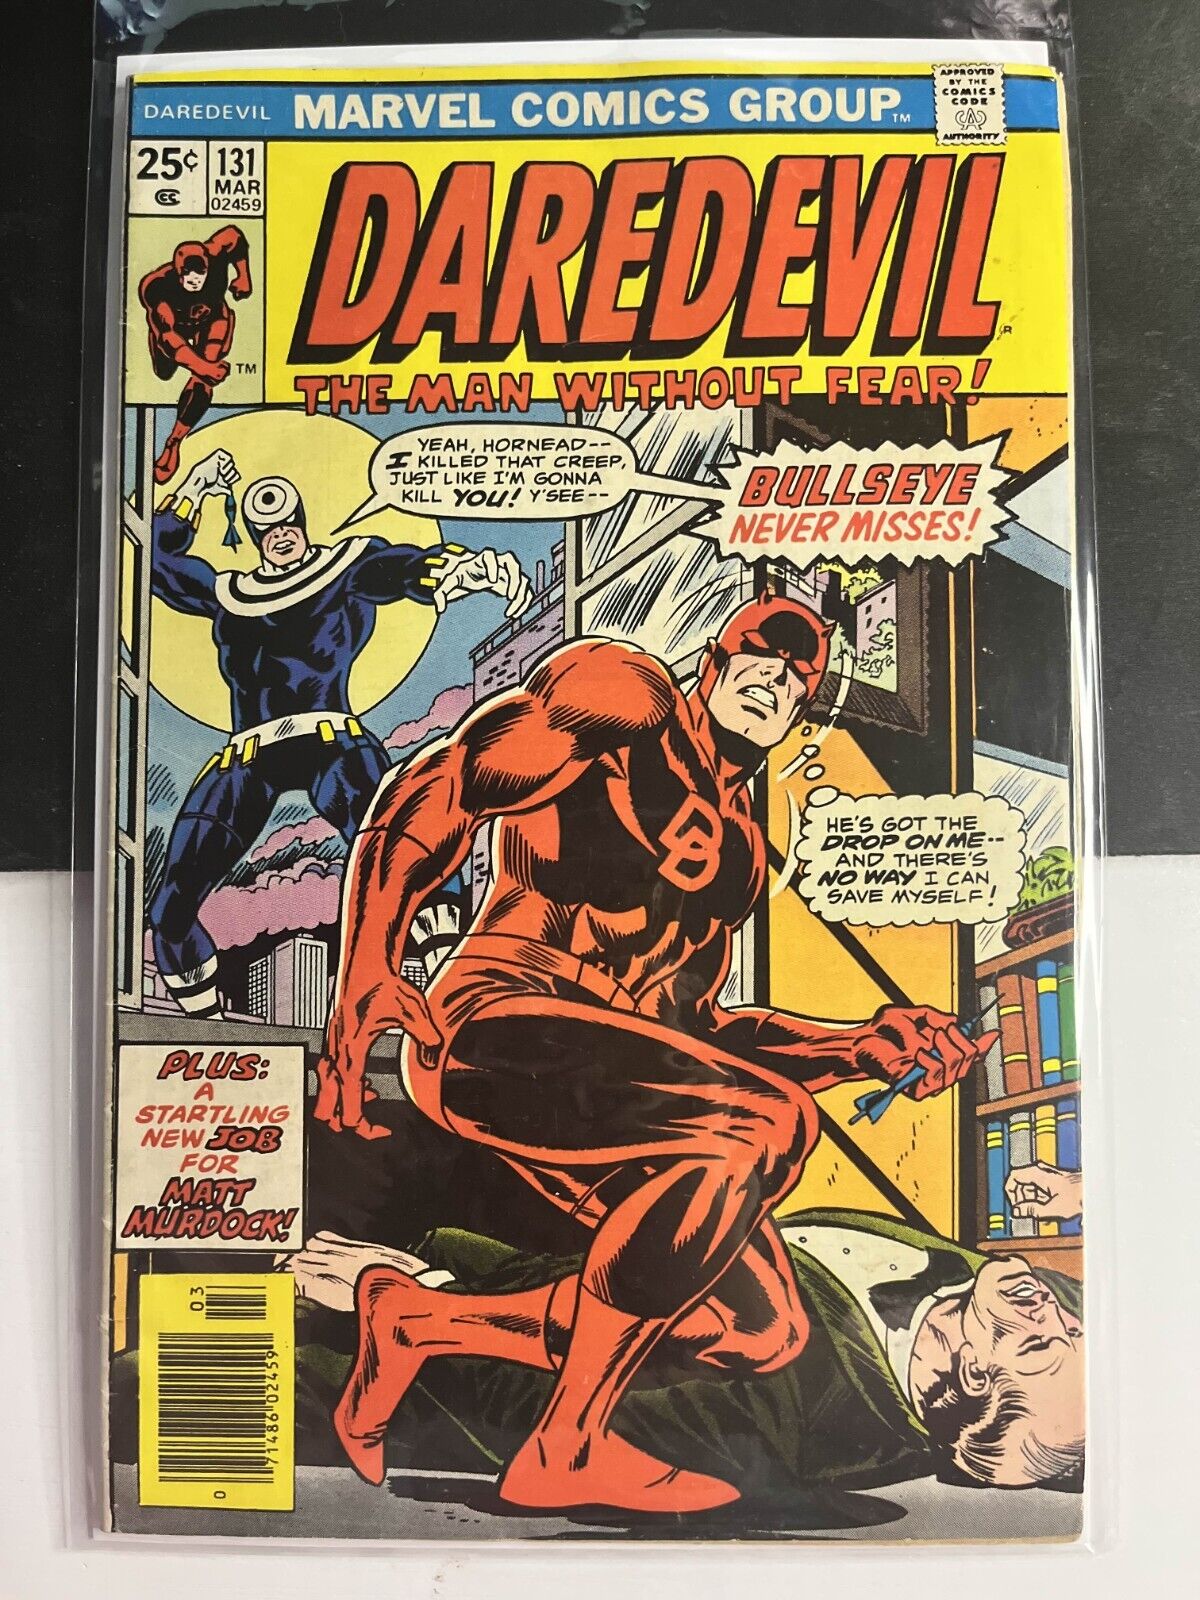 Daredevil #131 (1976) Origin and 1st Appearance of Bullseye